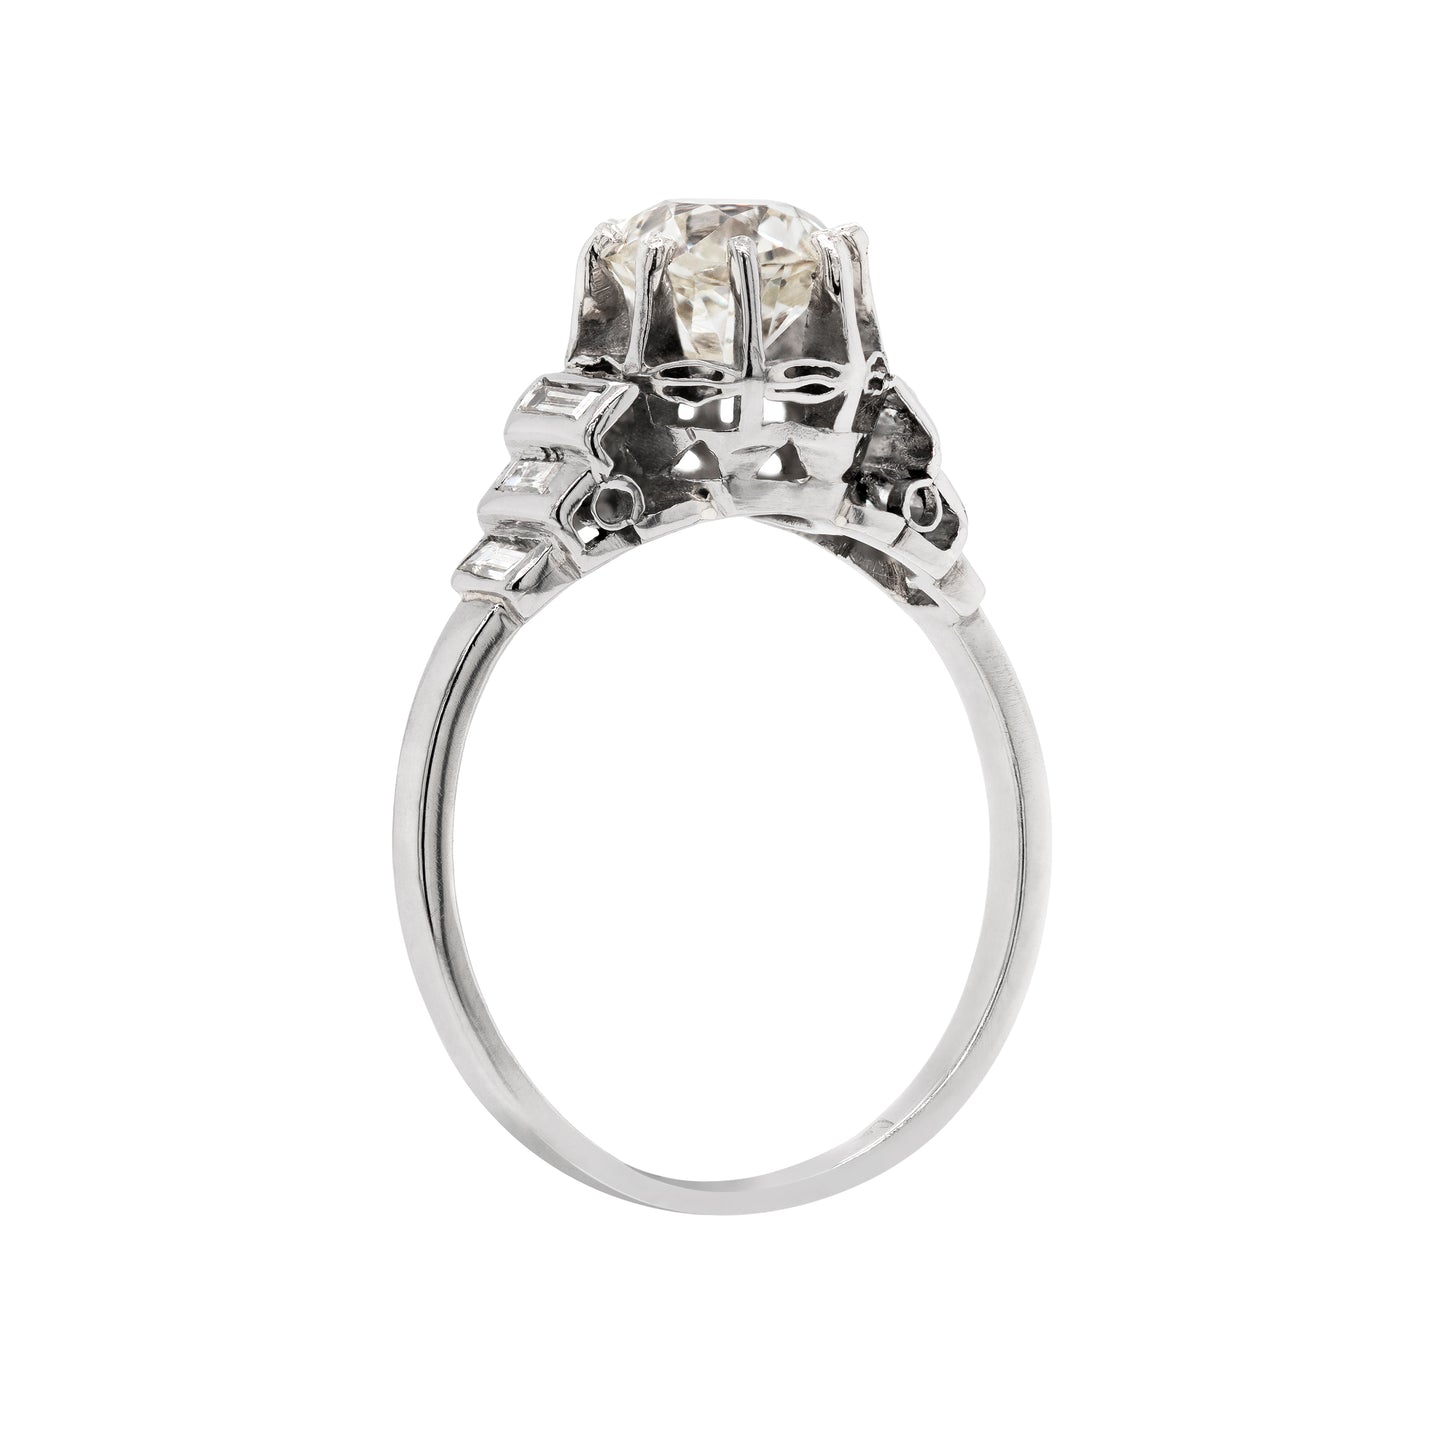 Antique Edwardian 1.15 Carat Old Cut Diamond Engagement Ring, Circa 1910